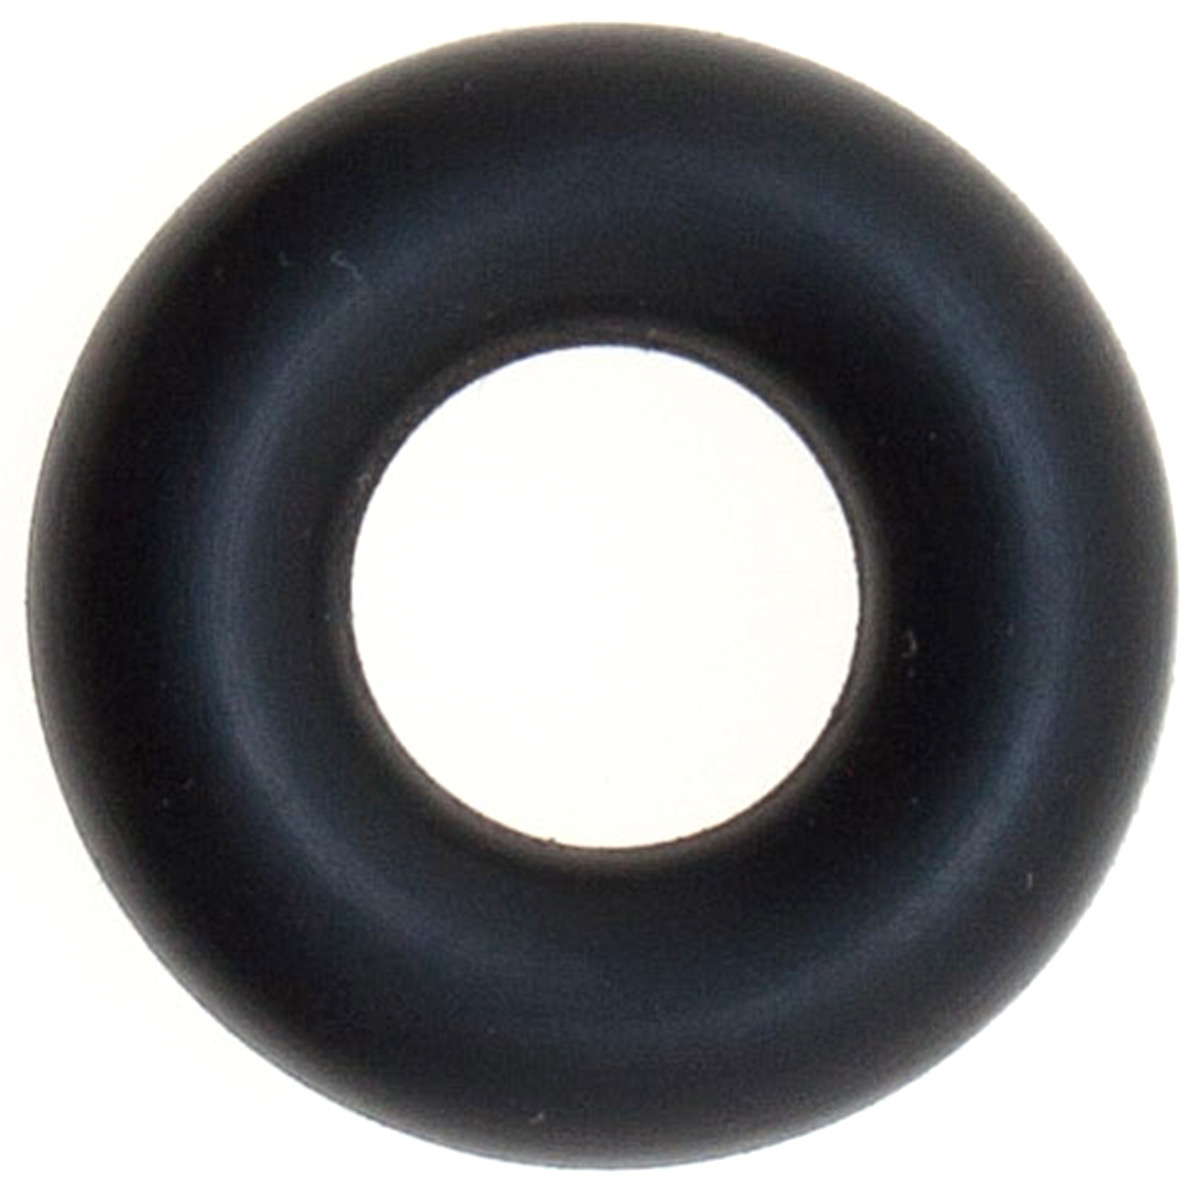 Dichtring / O-Ring 2,8 x 1,6 mm FKM 80 schwarz oder braun